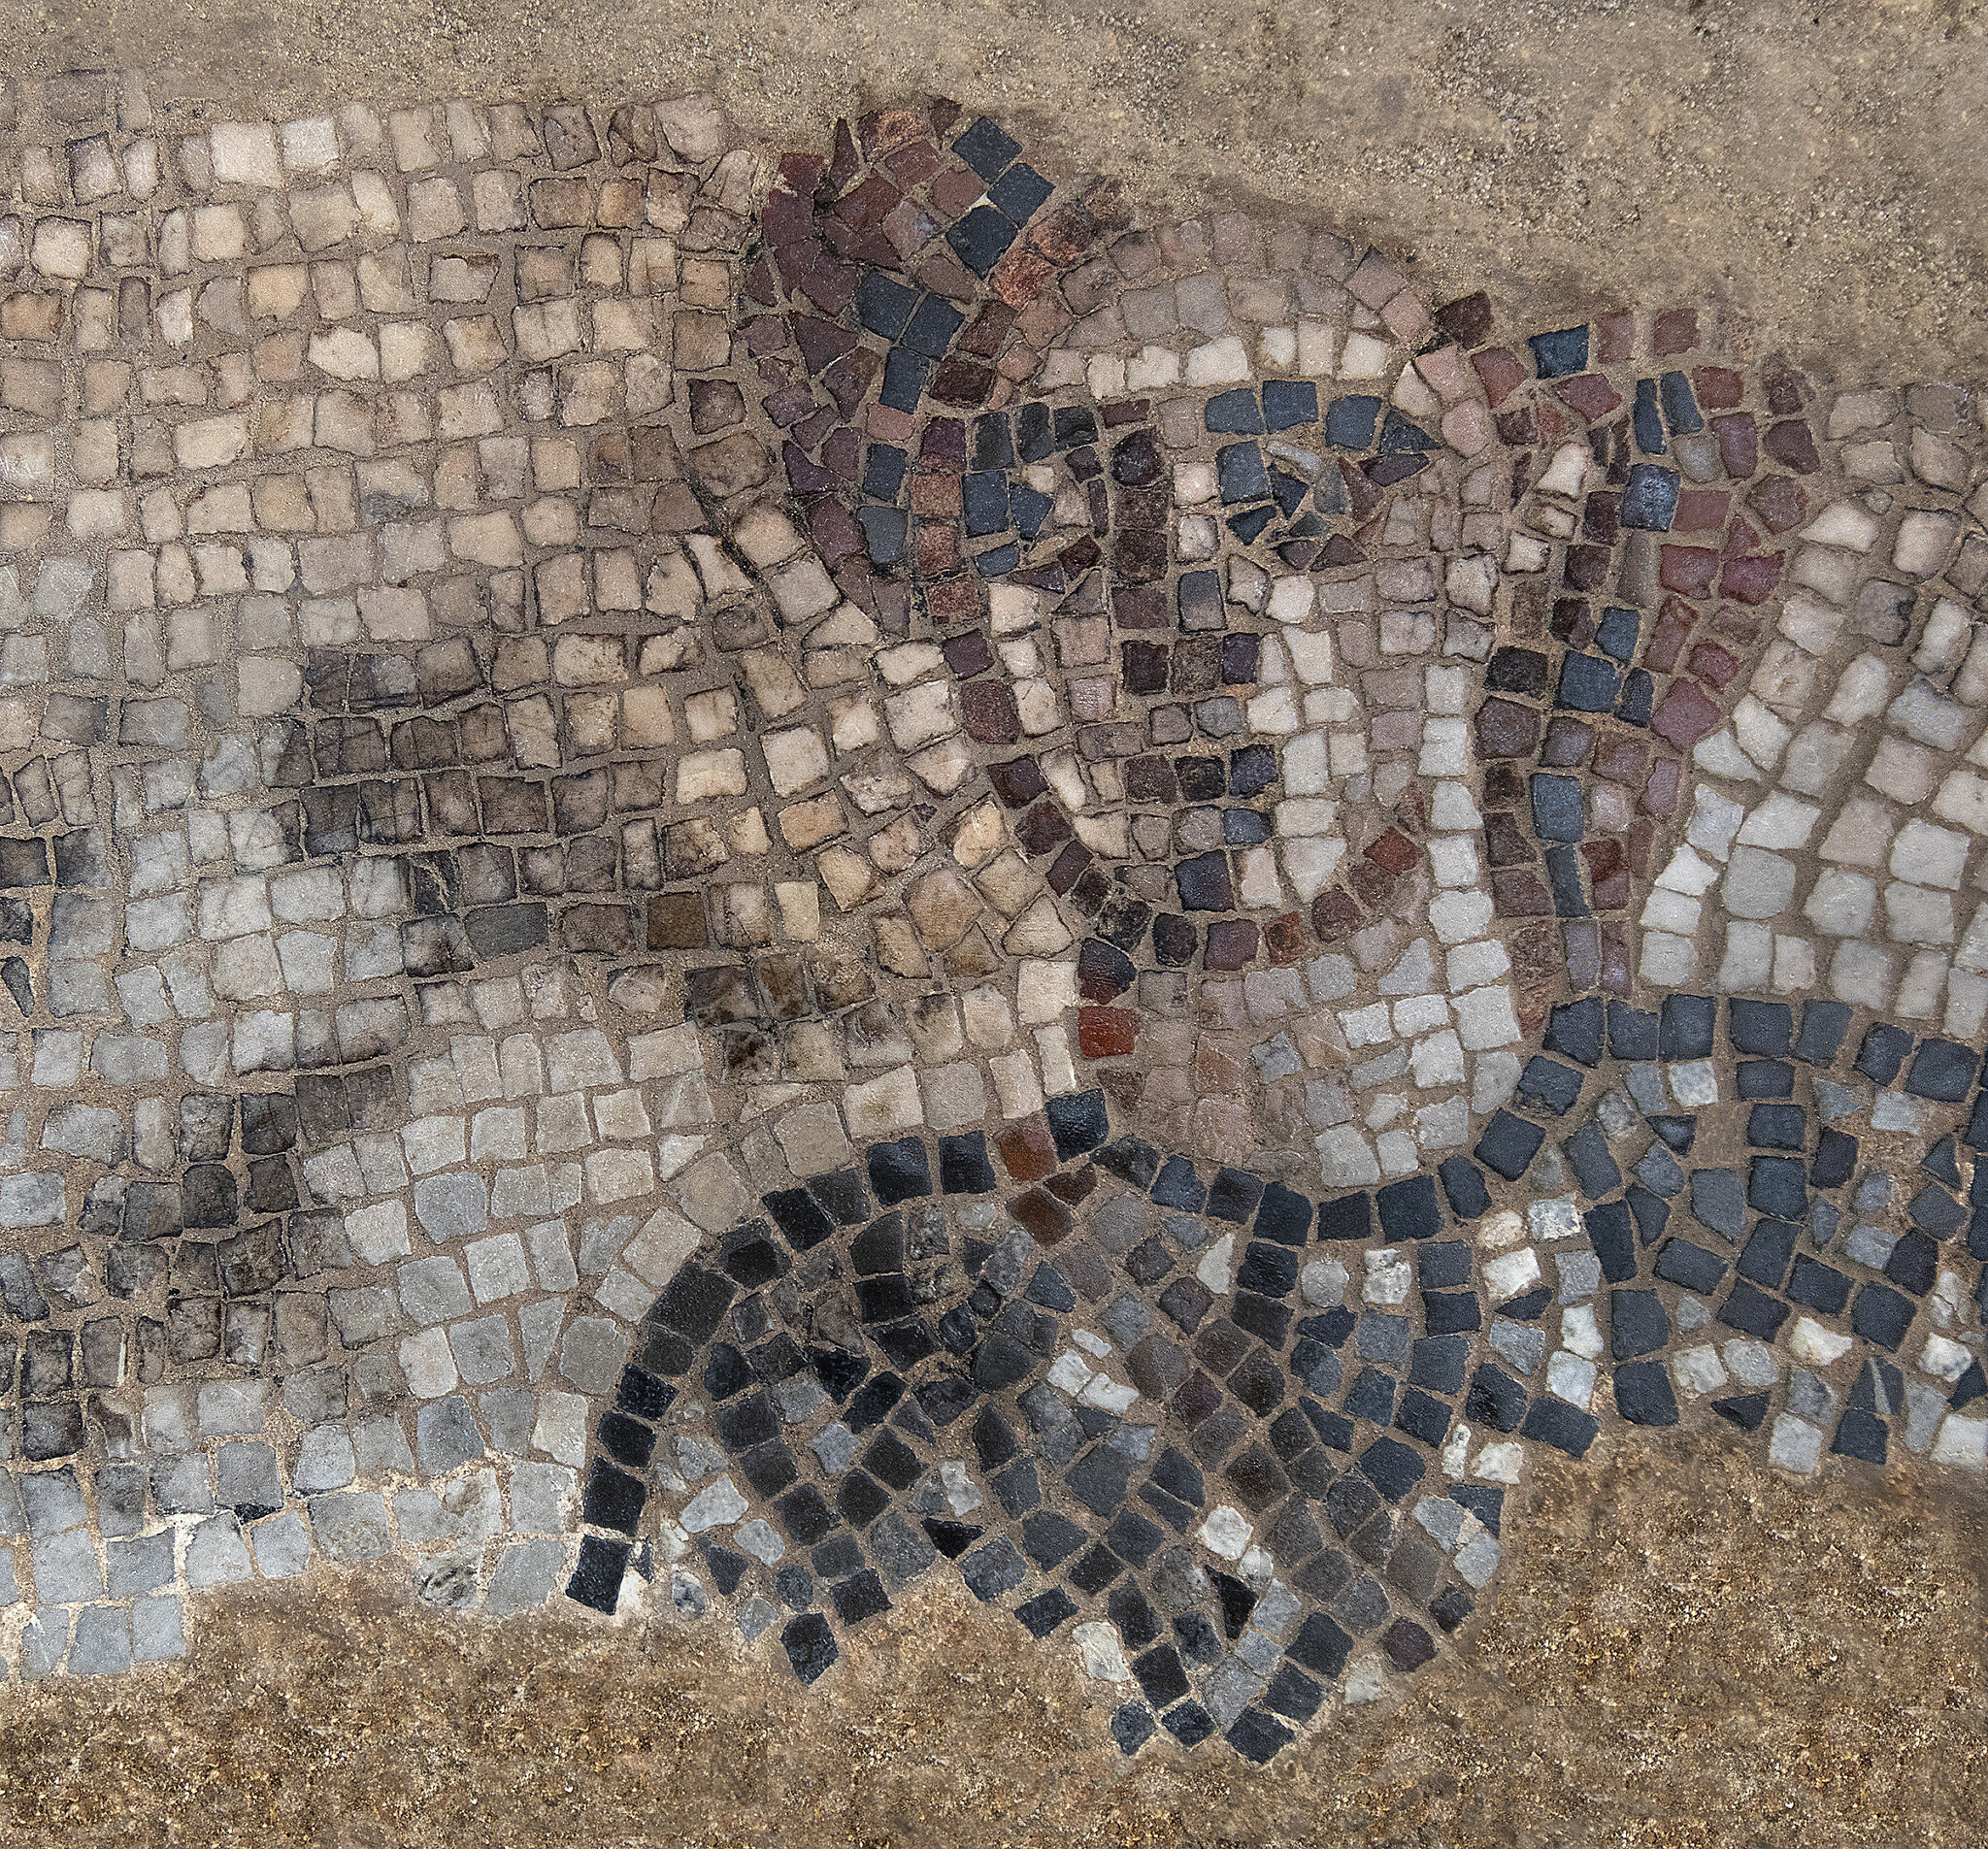 the-israelite-commander-barak-depicted-in-the-huqoq-synagogue-mosaic-photo-by-jim-haberman-2400-pix.jpg